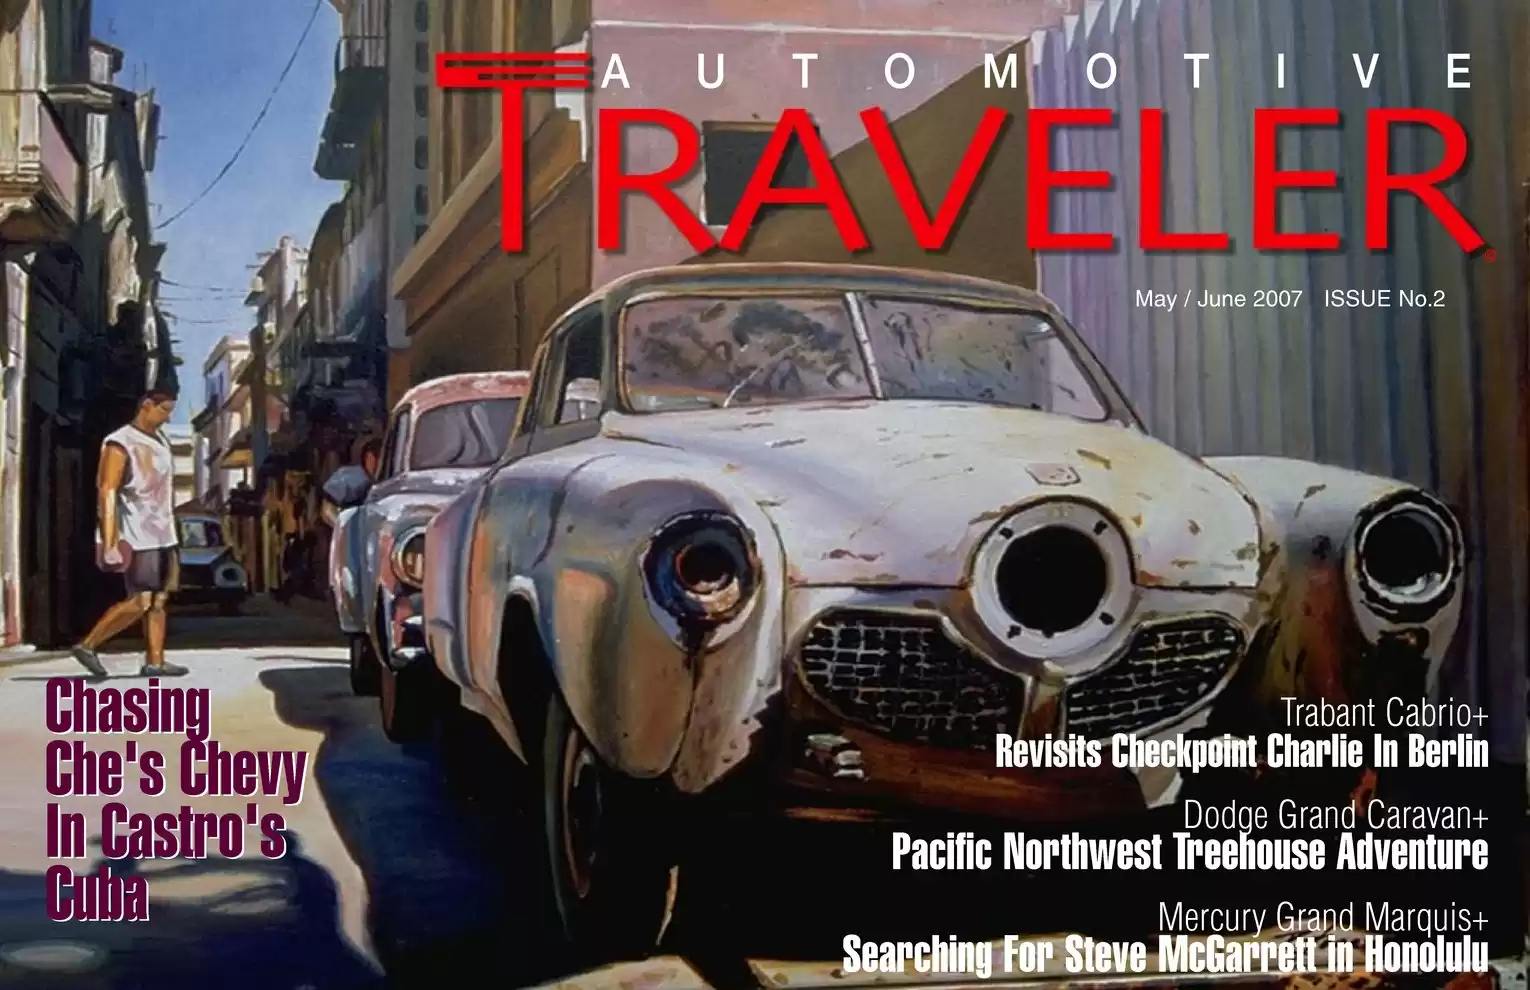 Automotive Traveler Magazine: Vol 1 Iss 2 Page 1